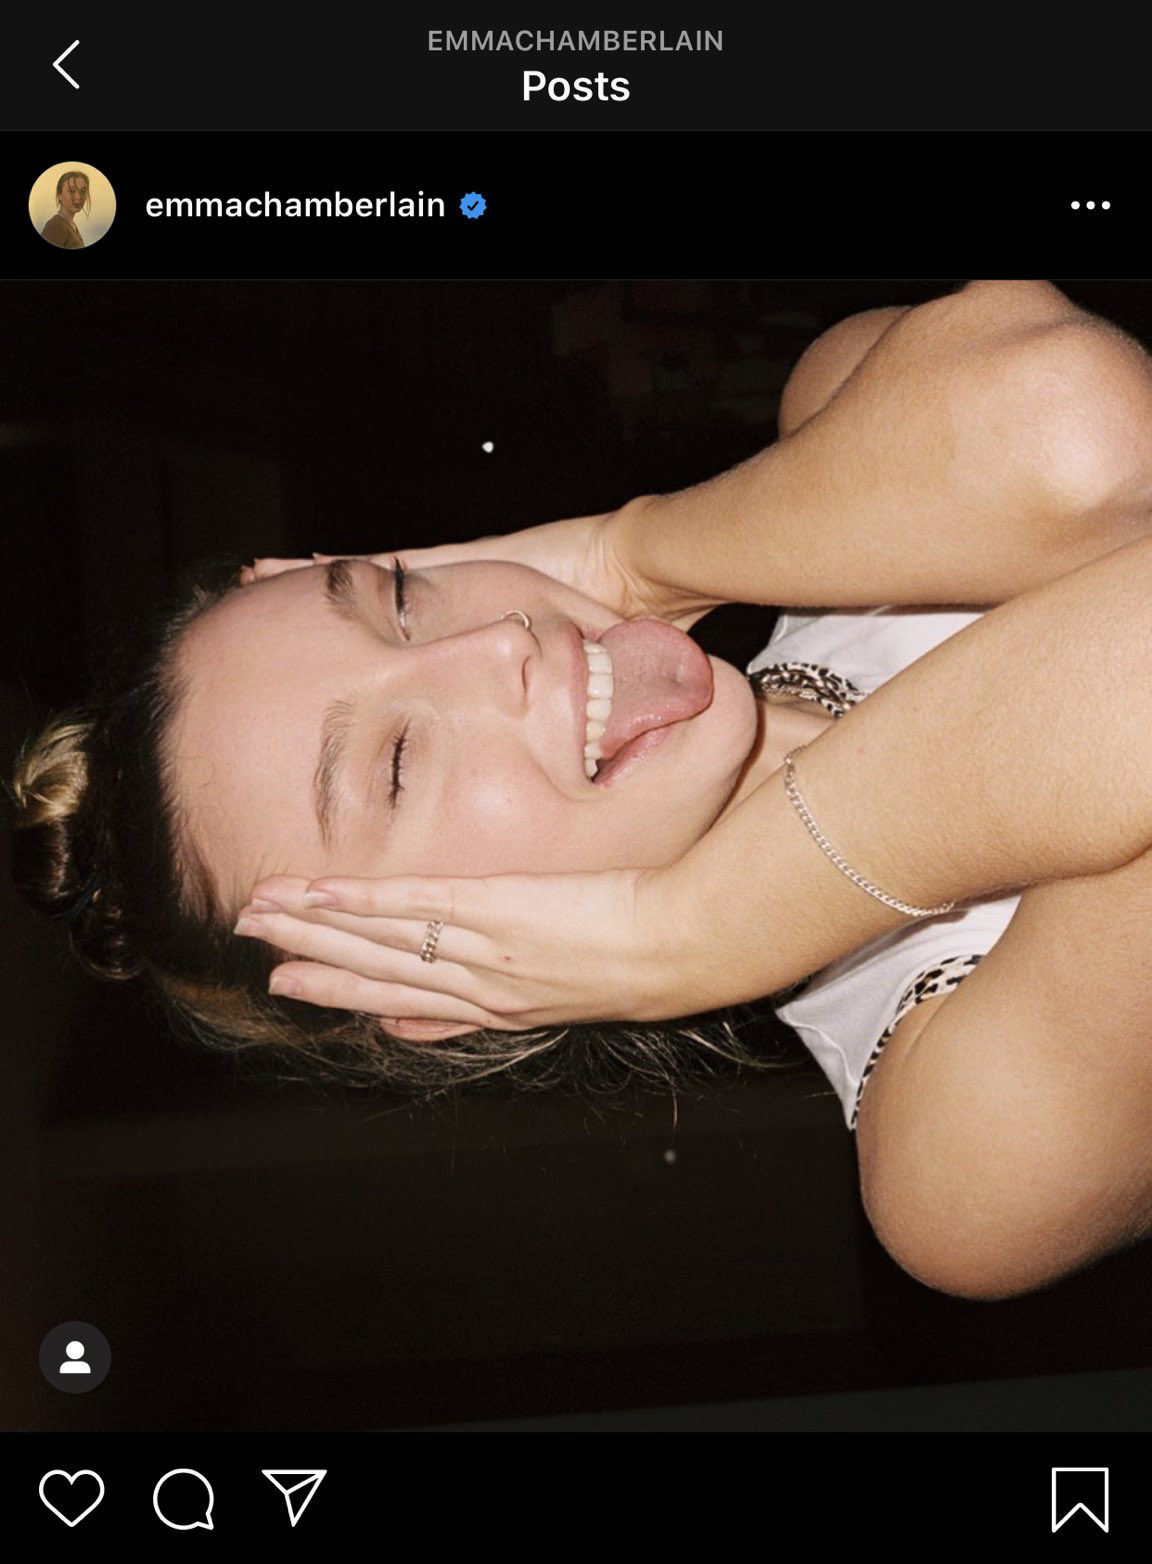 emma chamberlain updates on Instagram: Emma Chamberlain looks